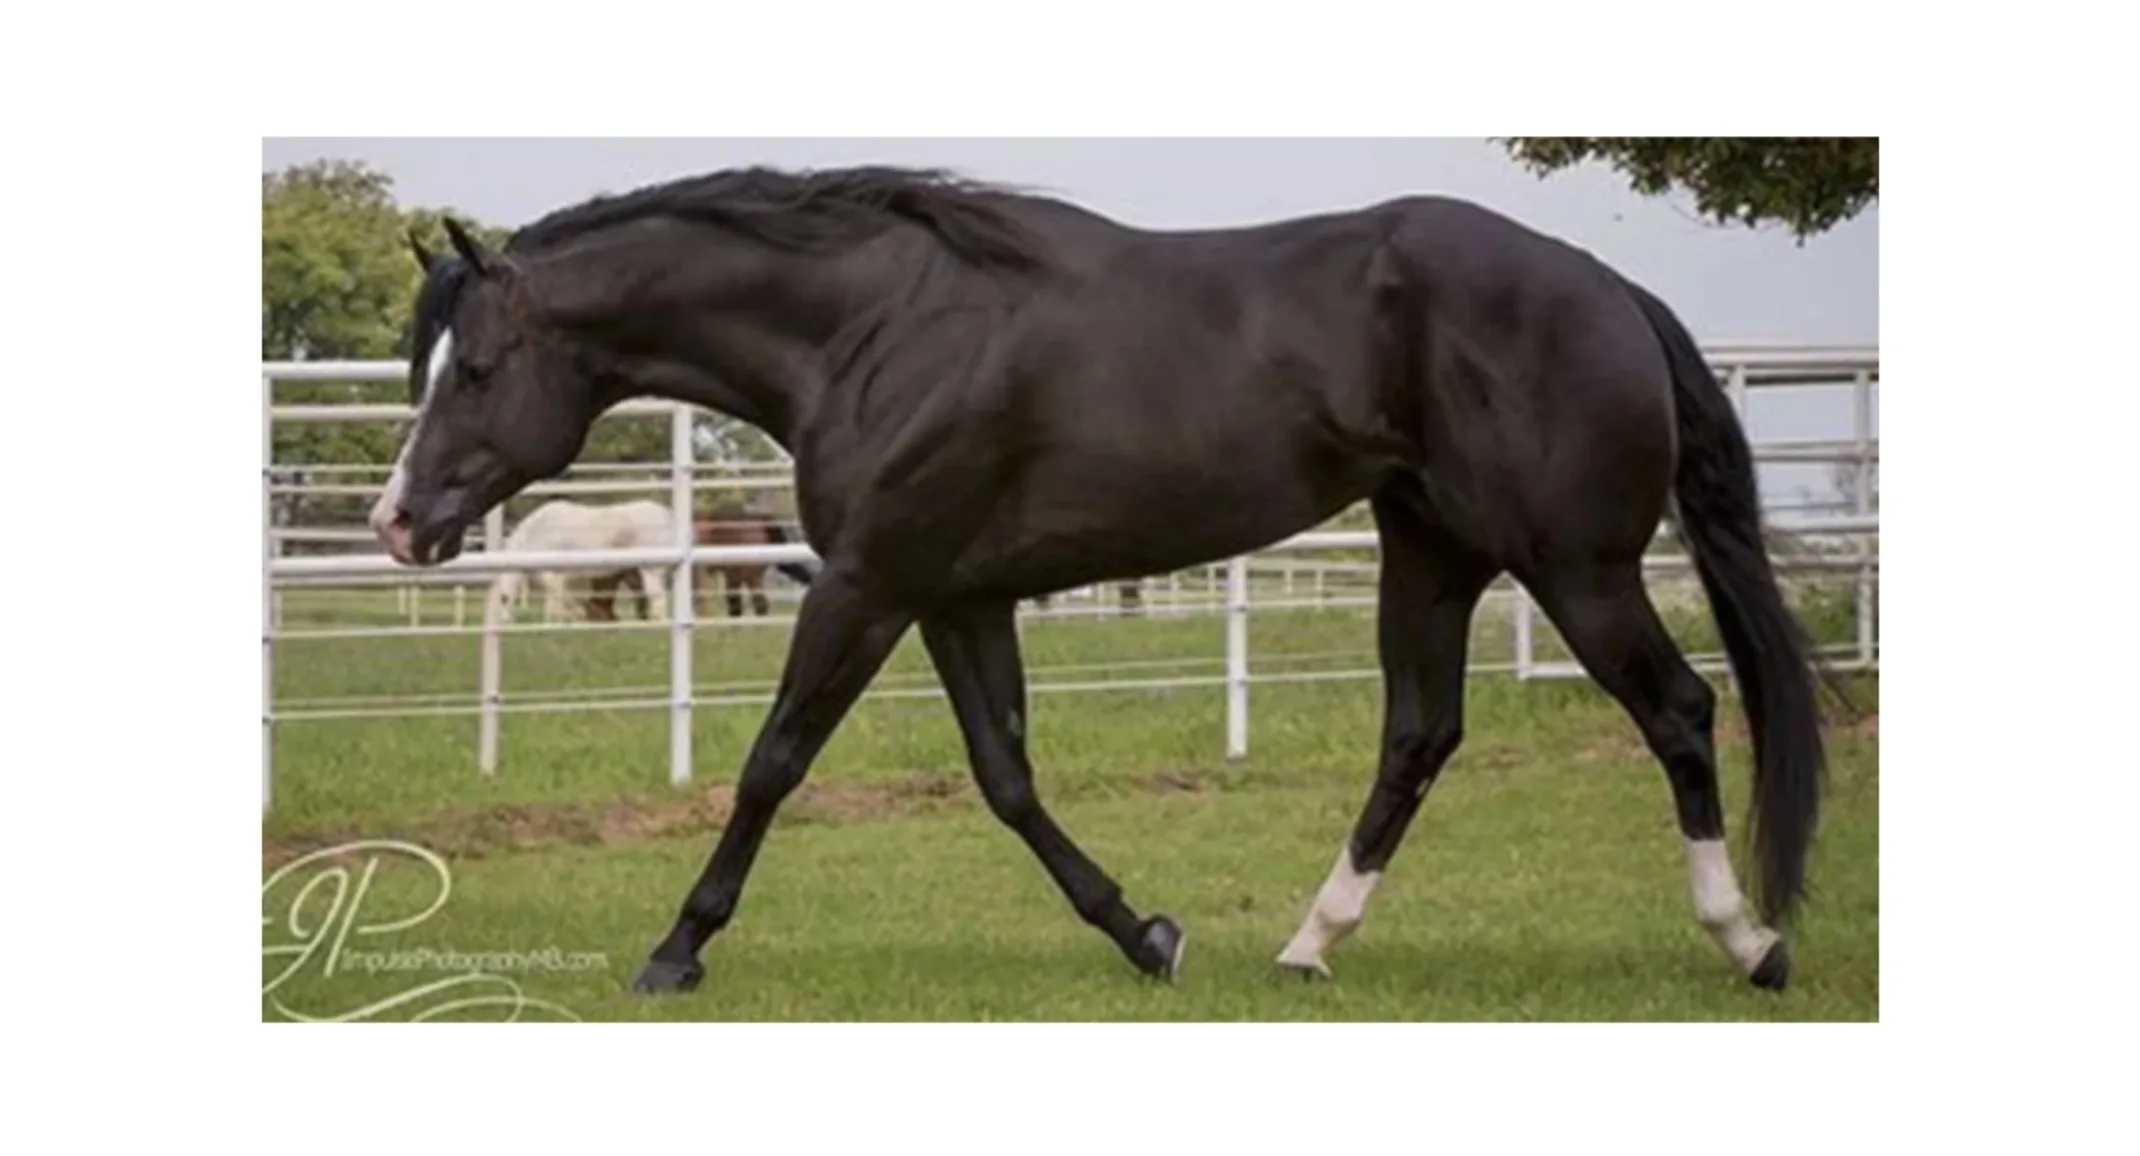 Nite Moves, a black horse